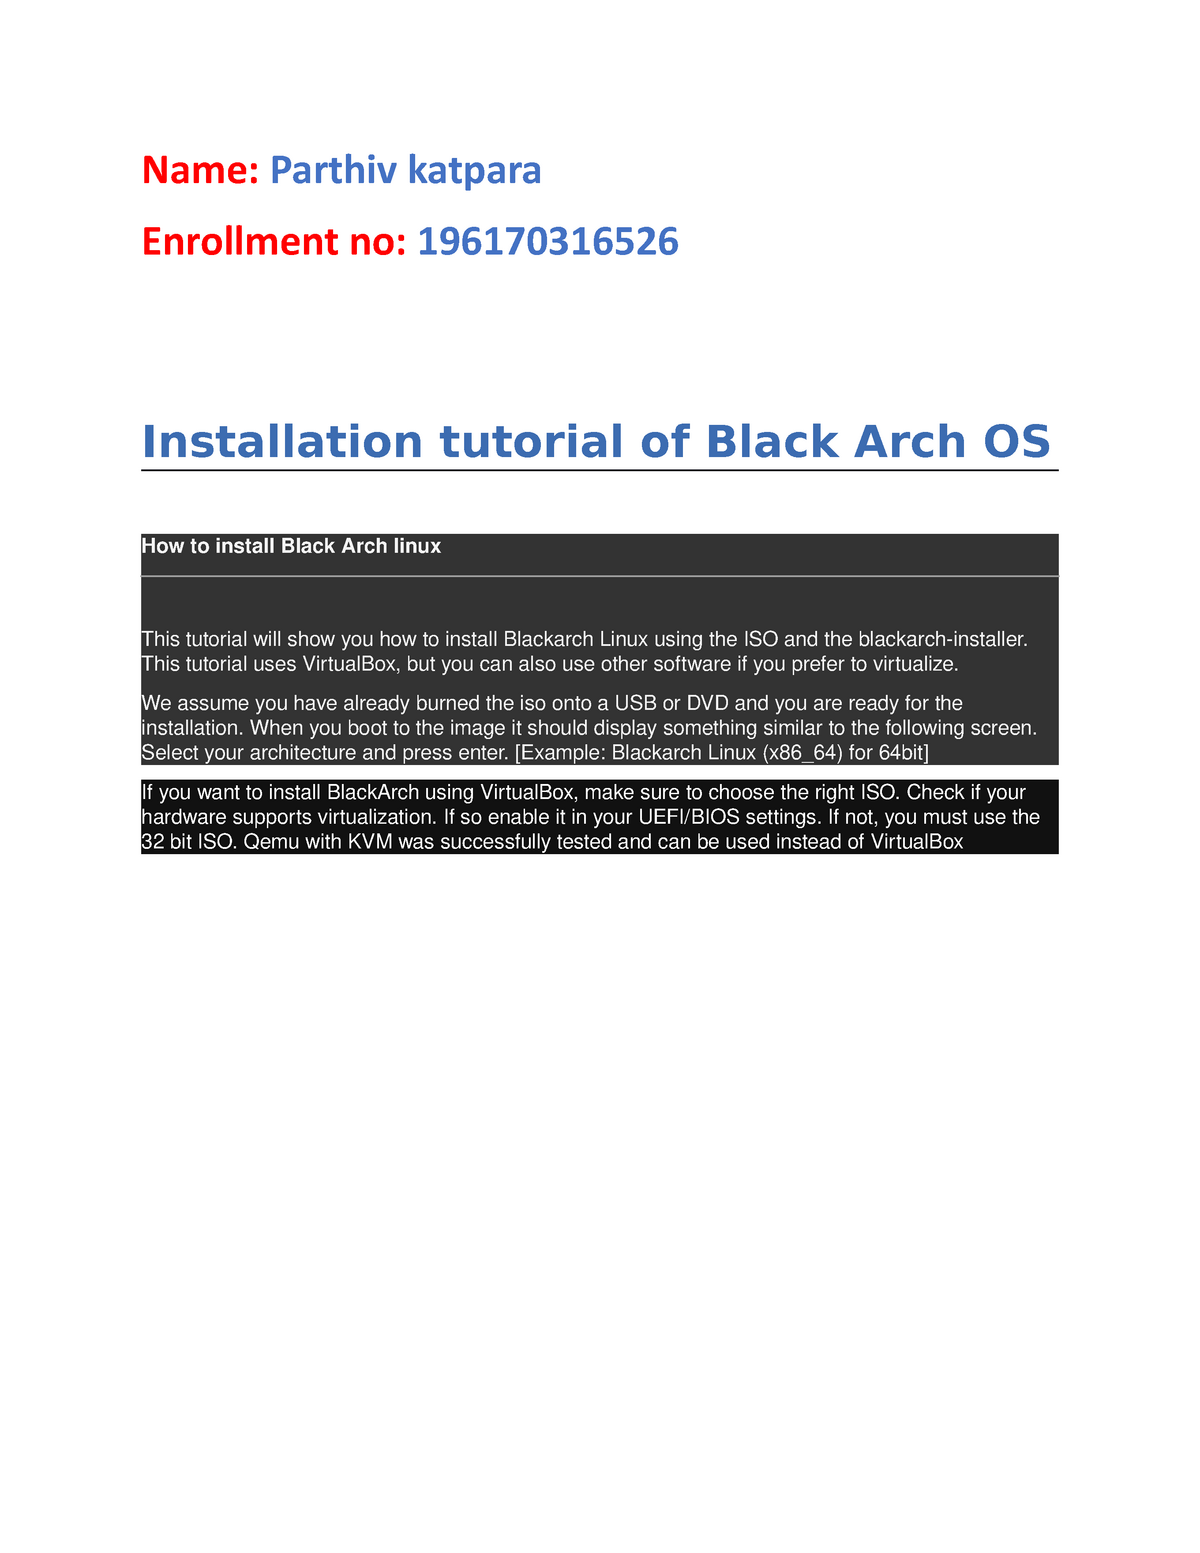 blackarch linux 32 bit iso download